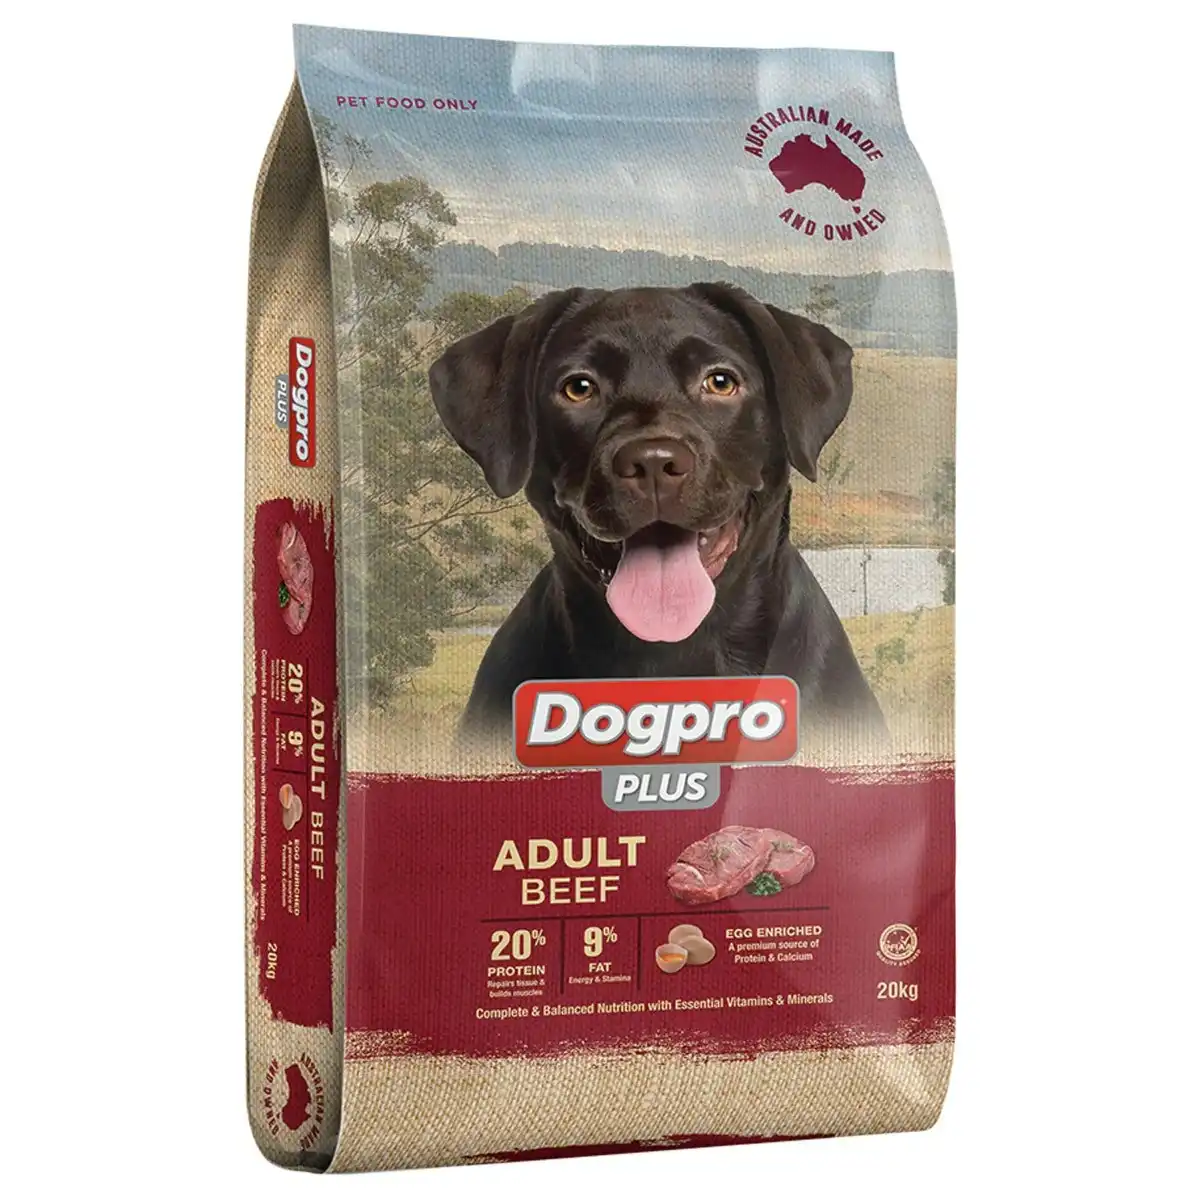 Dogpro Plus Adult Beef Dry Dog Food 20kg